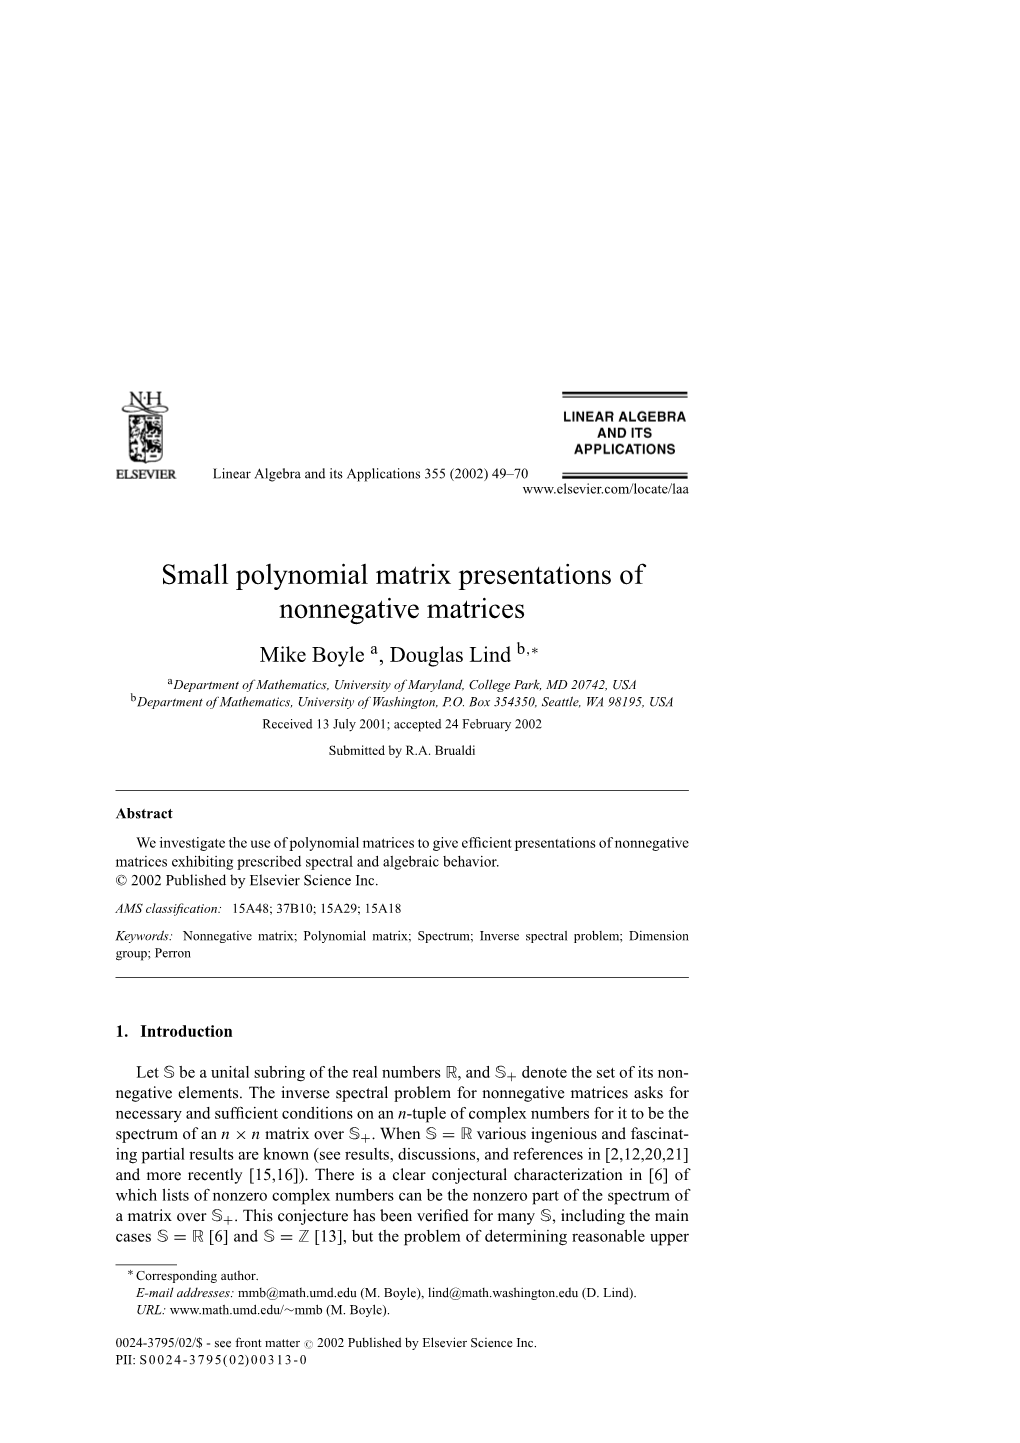 Small Polynomial Matrix Presentations of Nonnegative Matrices